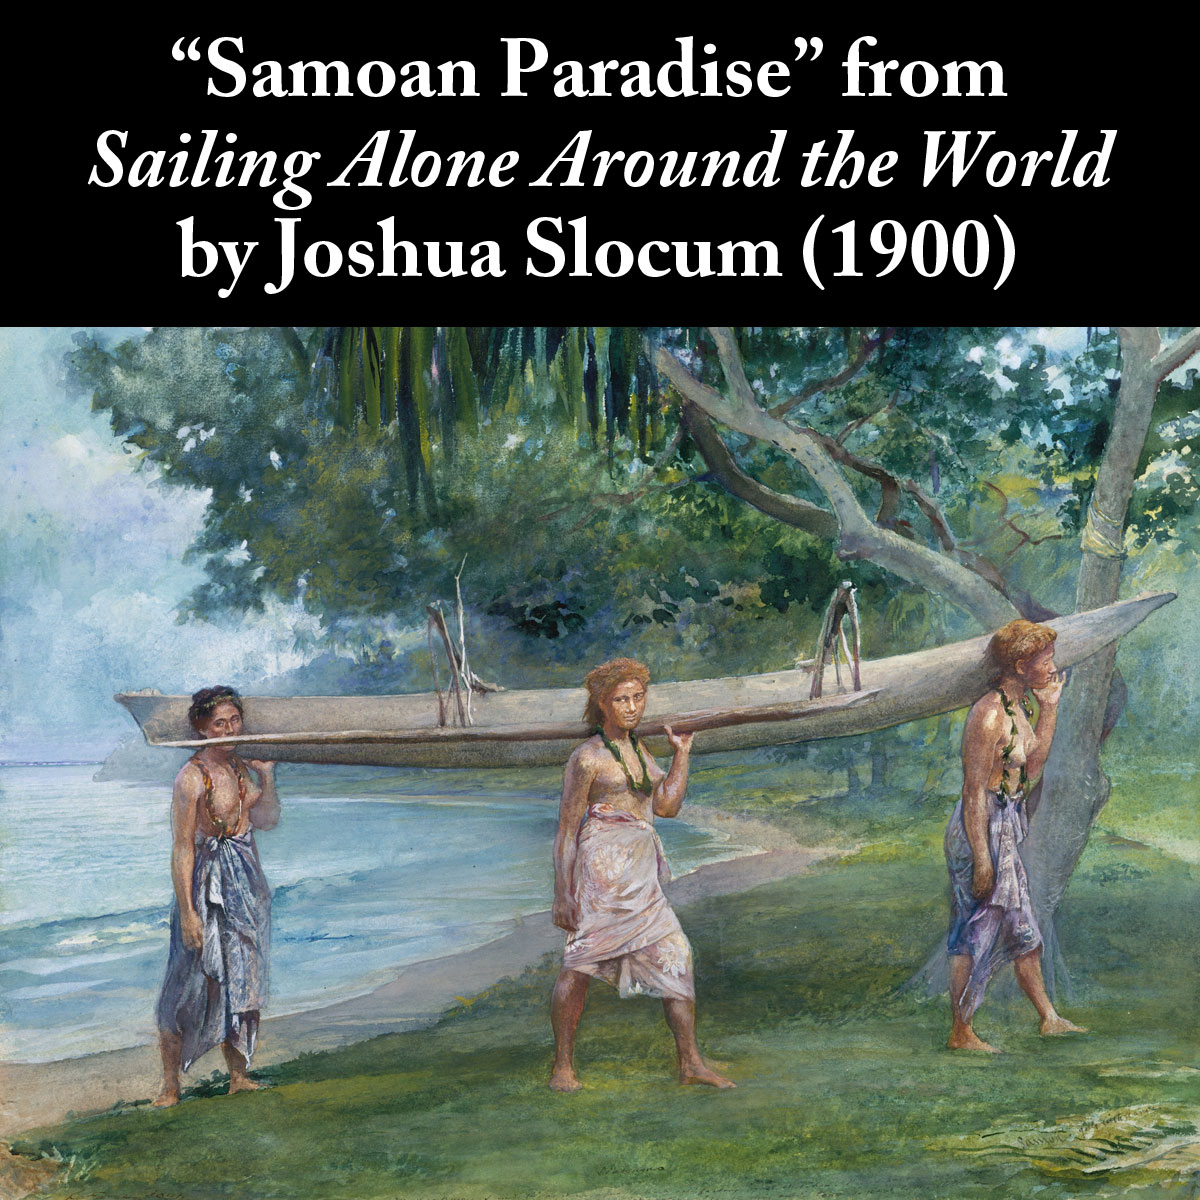 Samoan Paradise from Sailing Alone Around the World by Joshua Slocum (1900)